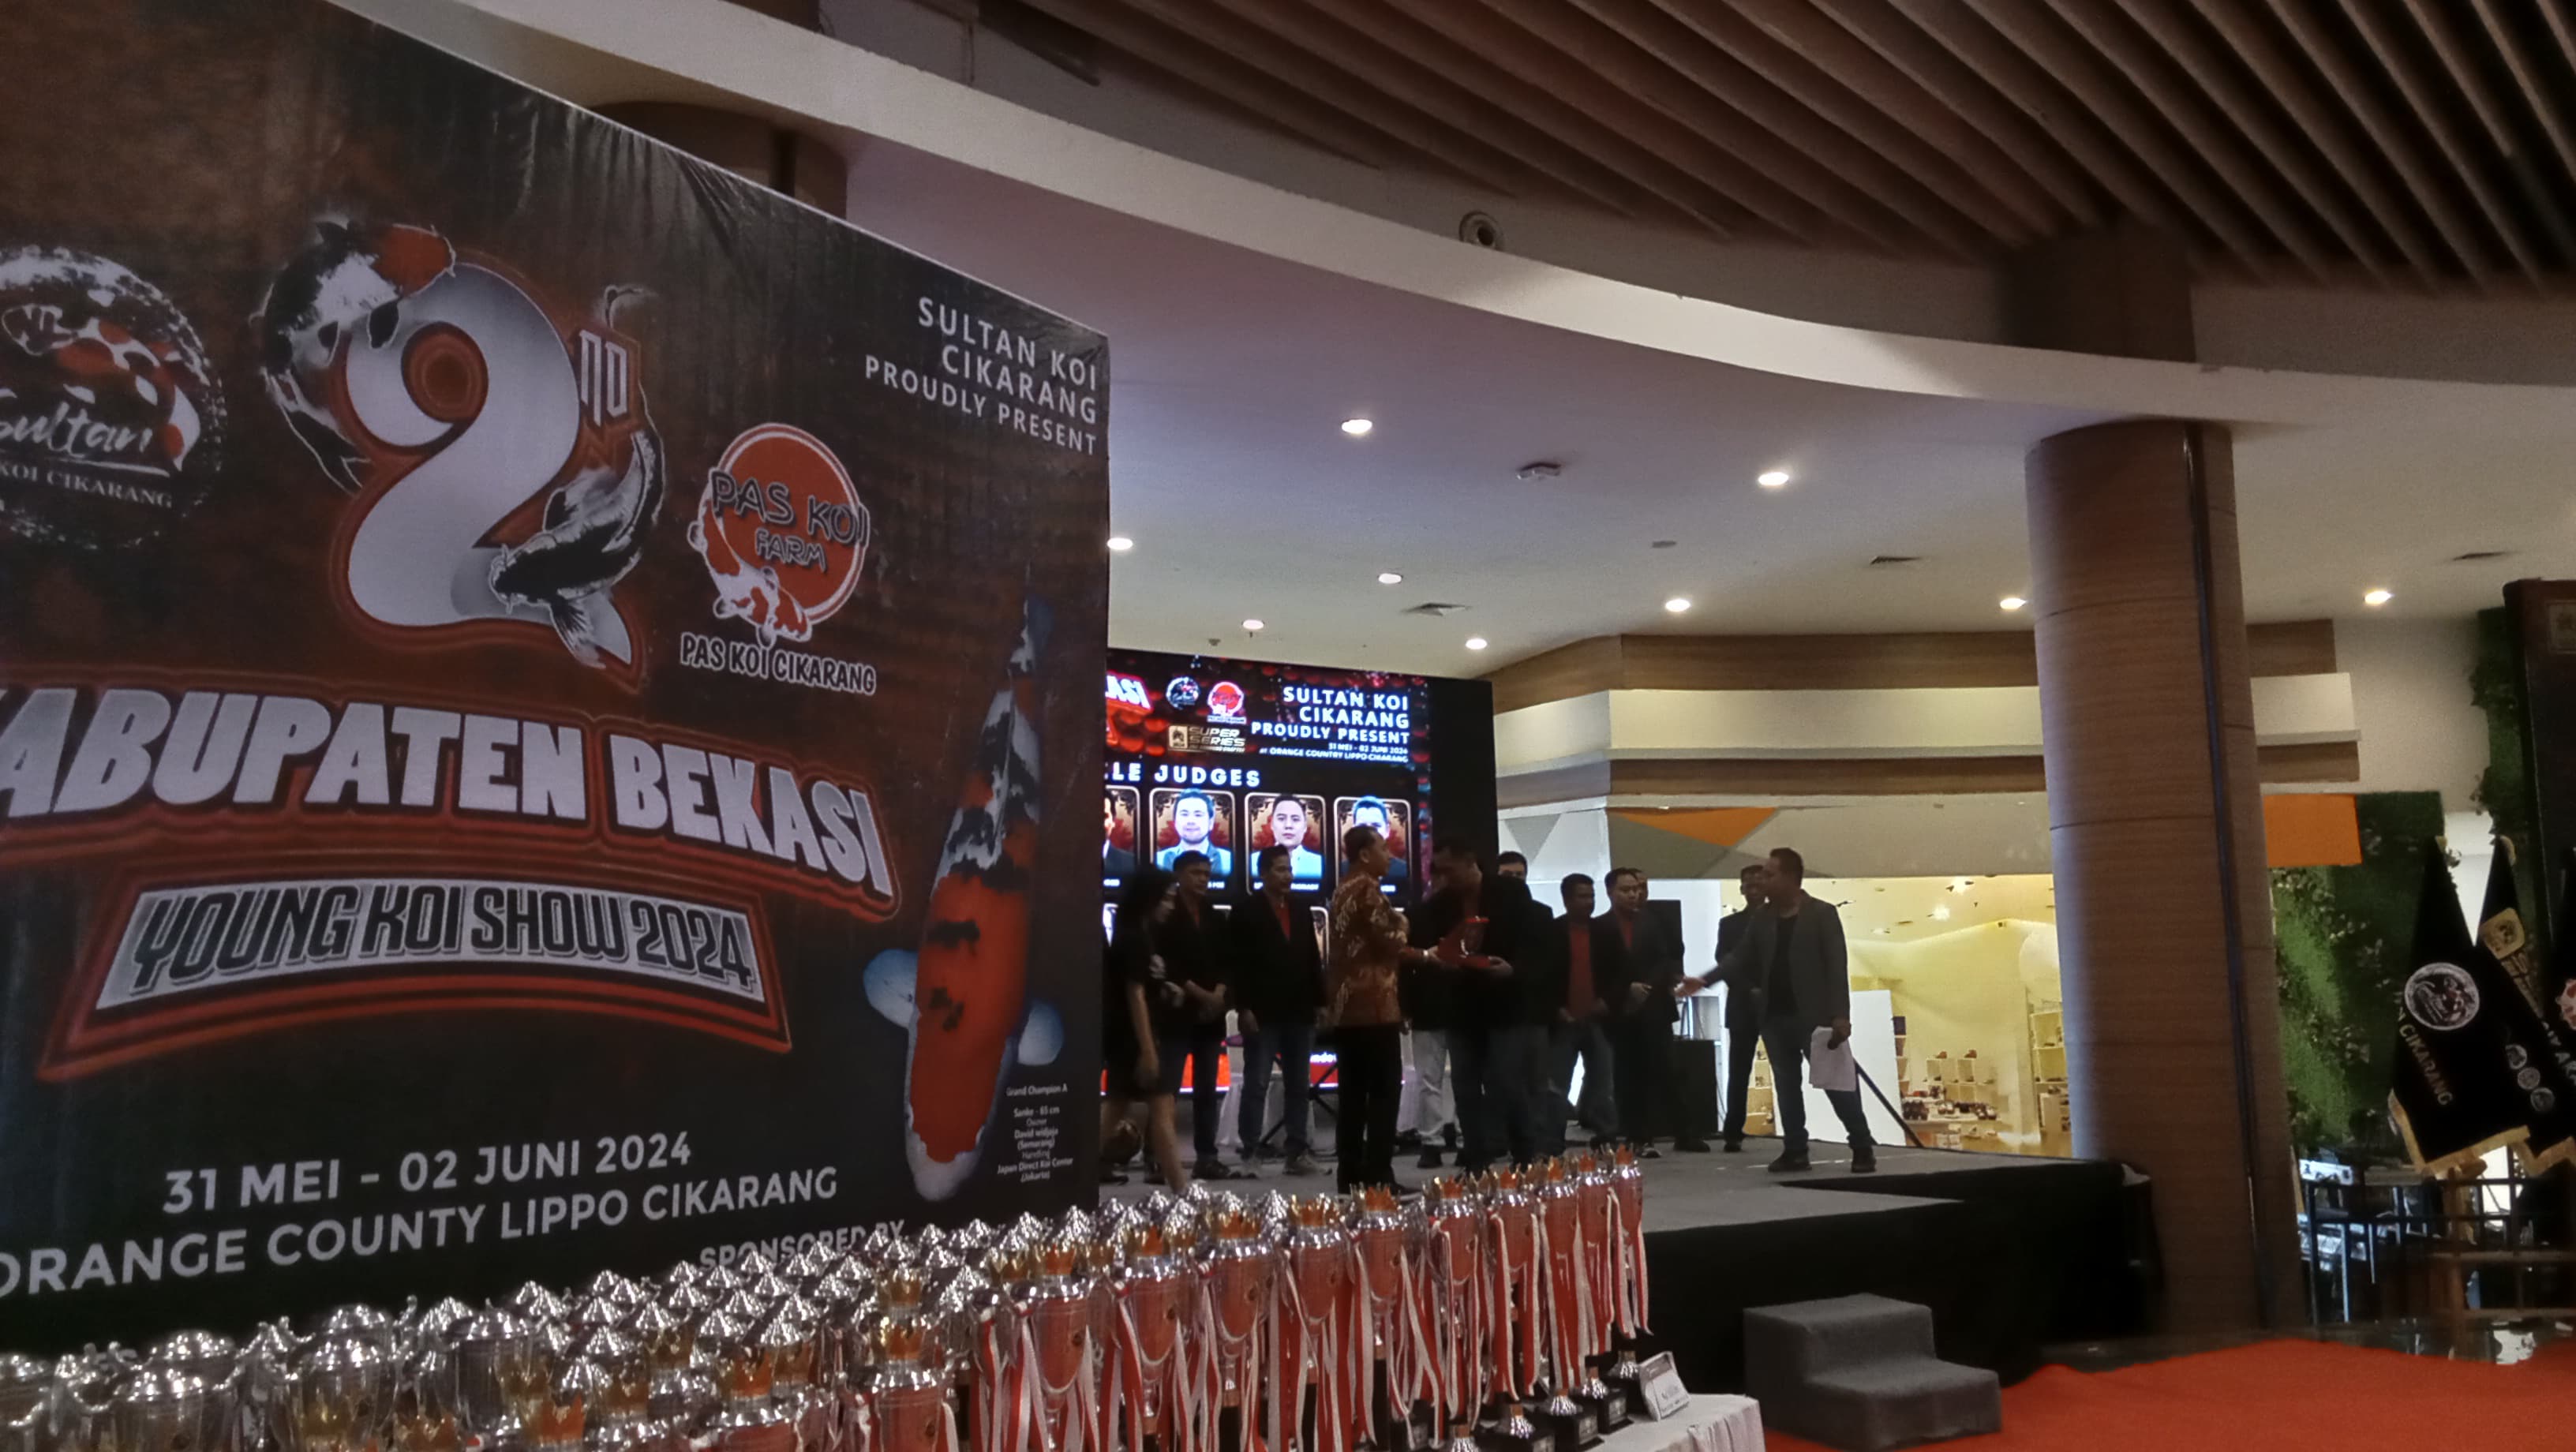 Sultan Koi Cikarang Sukses Gelar 2nd Kabupaten Bekasi Young Koi Show 2024